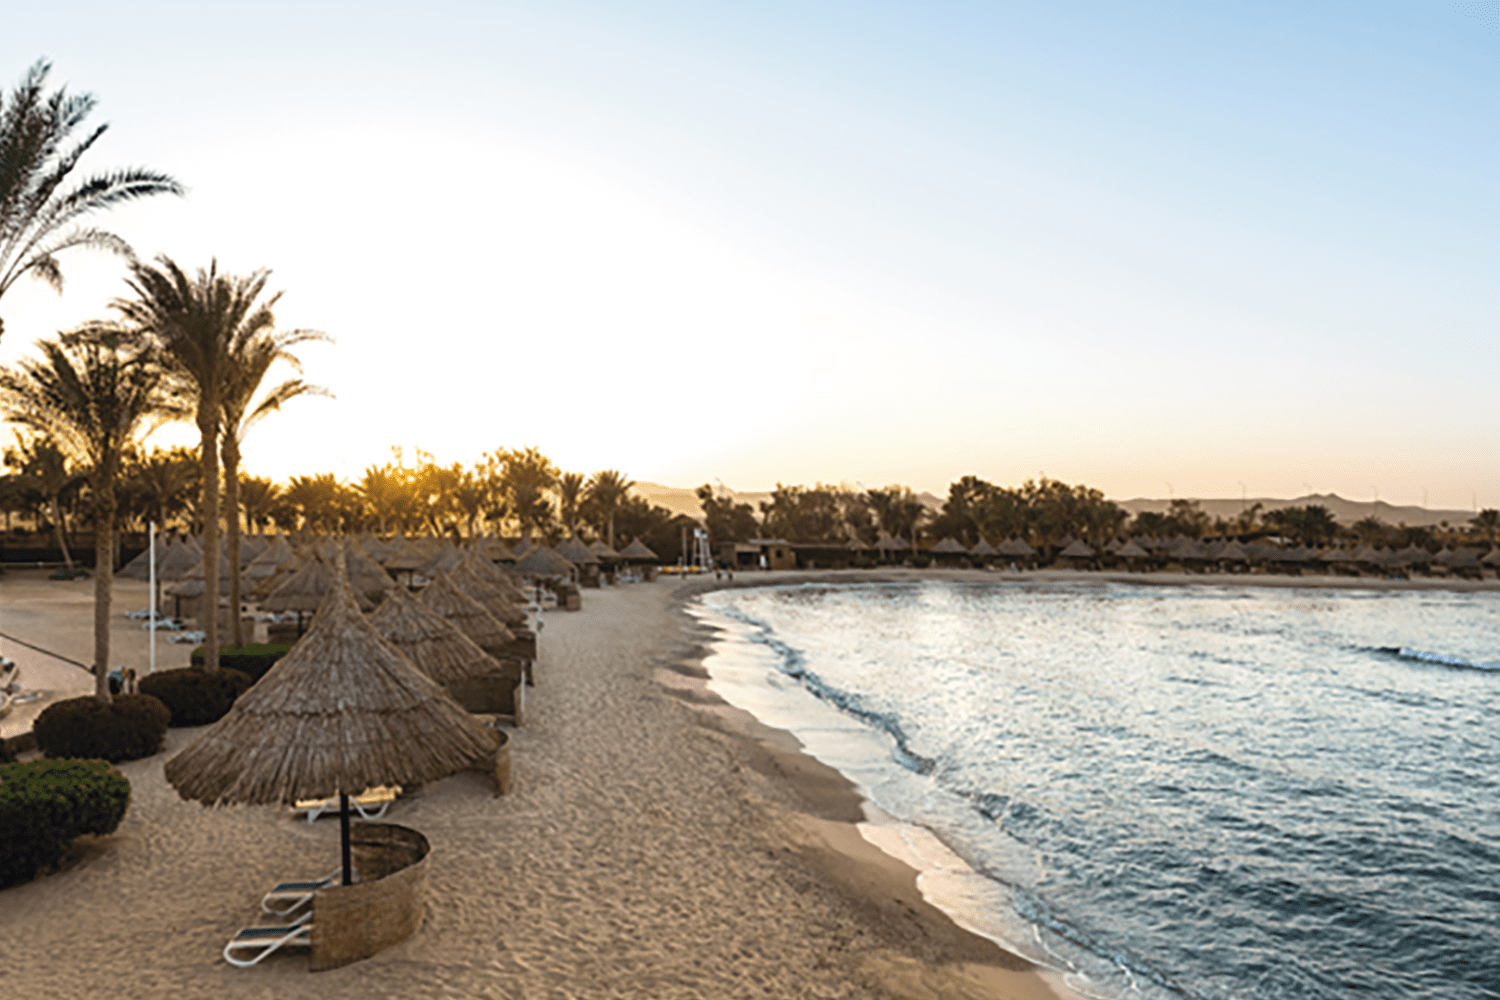 Mövenpick Resort El Quseir - El Quseir | Ancient Egypt & The Red Sea Tour | The Magic of Jordan & Egypt Tour